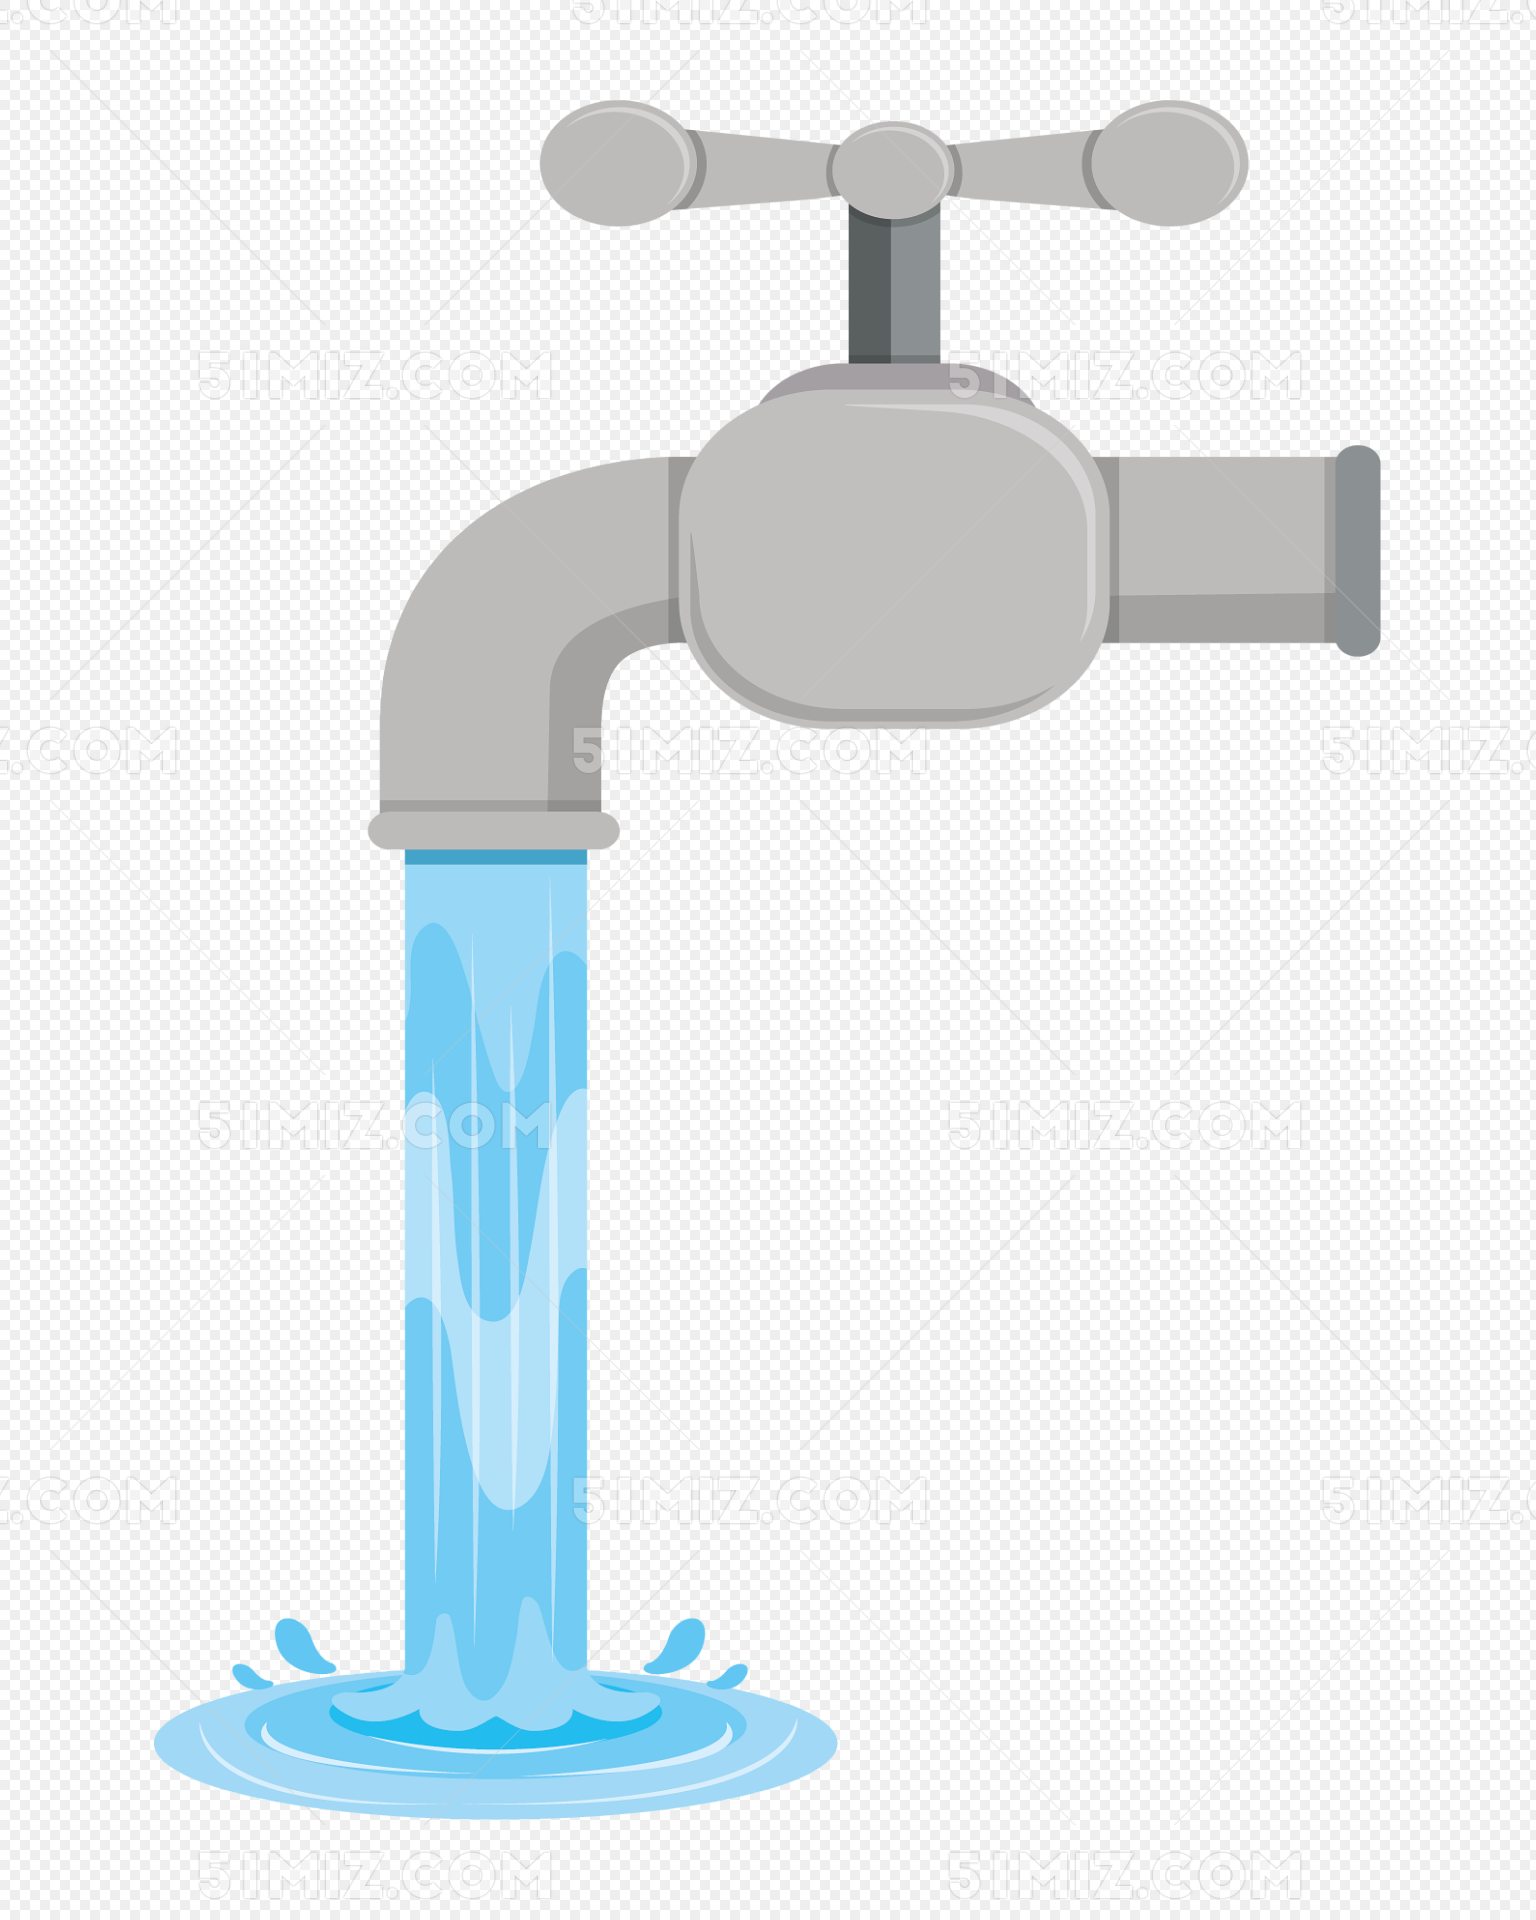 300 多张免费的“Faucet”和“水龙头”插图 - Pixabay